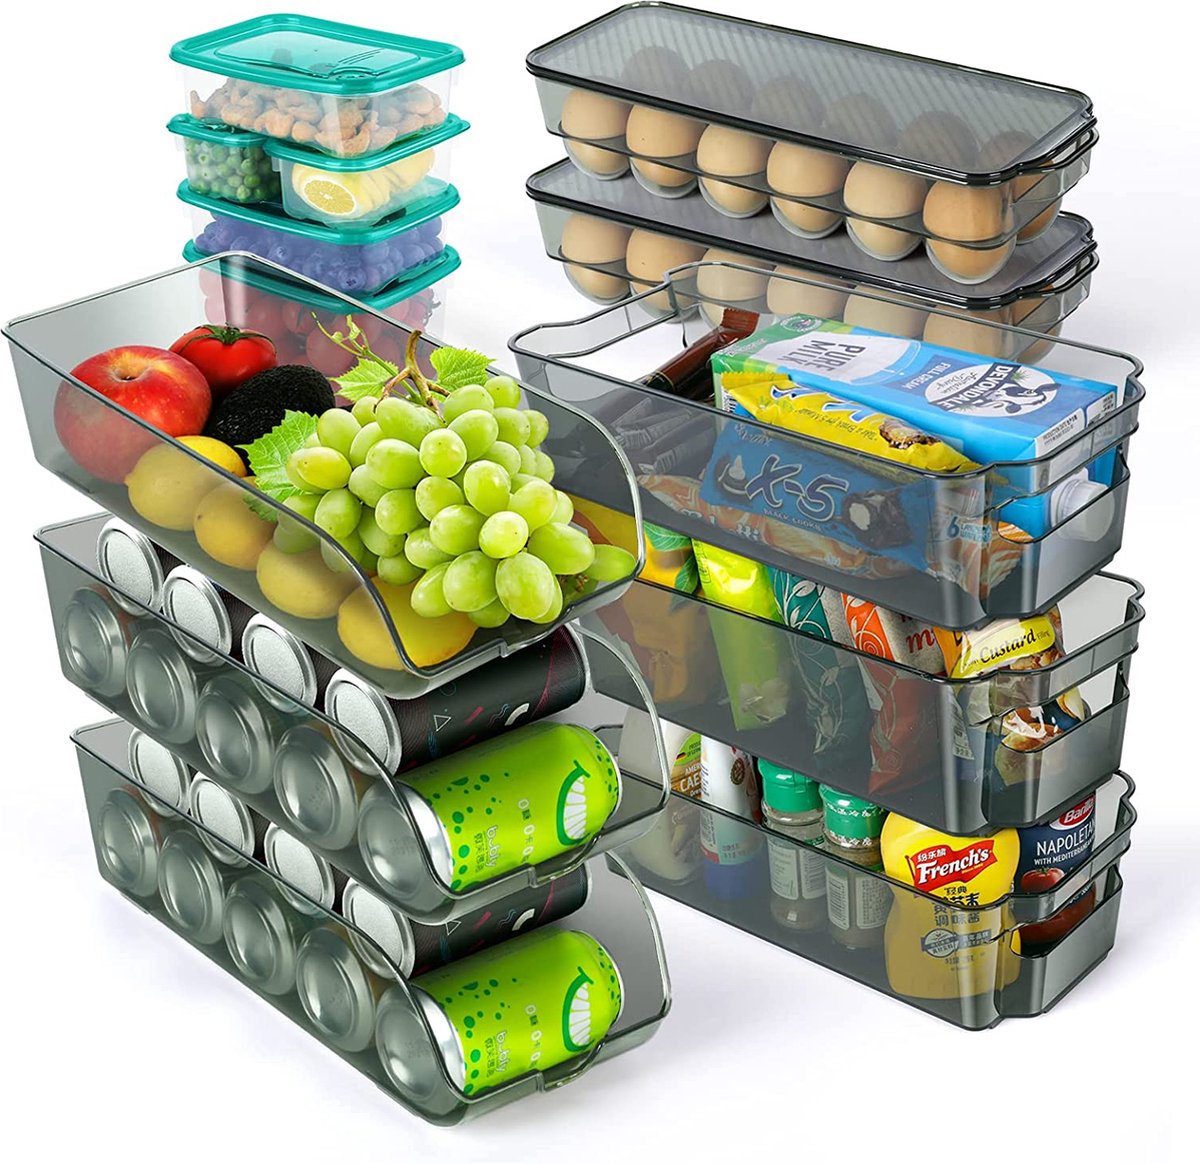 13-delige koelkastorganizer, stapelbare koelkastorganisator met handvat, blikhouder, eierdoos met deksel, luchtdichte opbergdoos, BPA-vrij, opbergdoos koelkast voor keuken